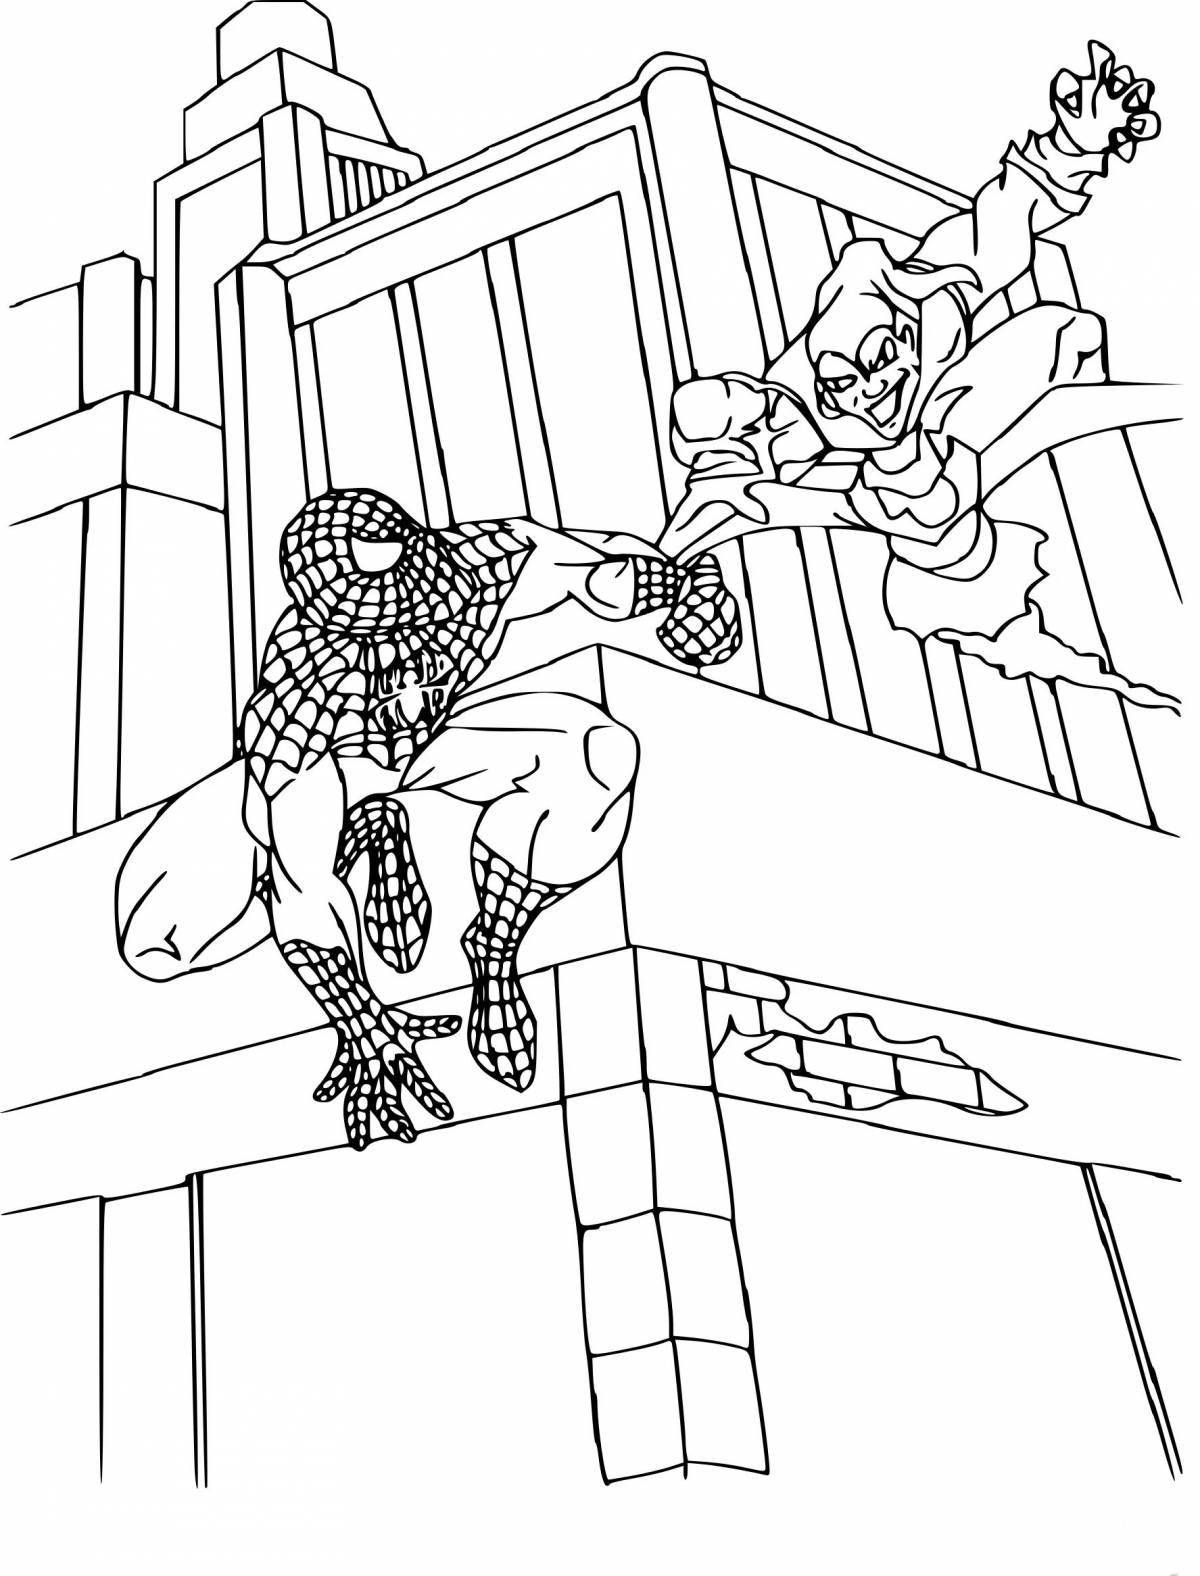 Inviting spider-man antistress coloring book